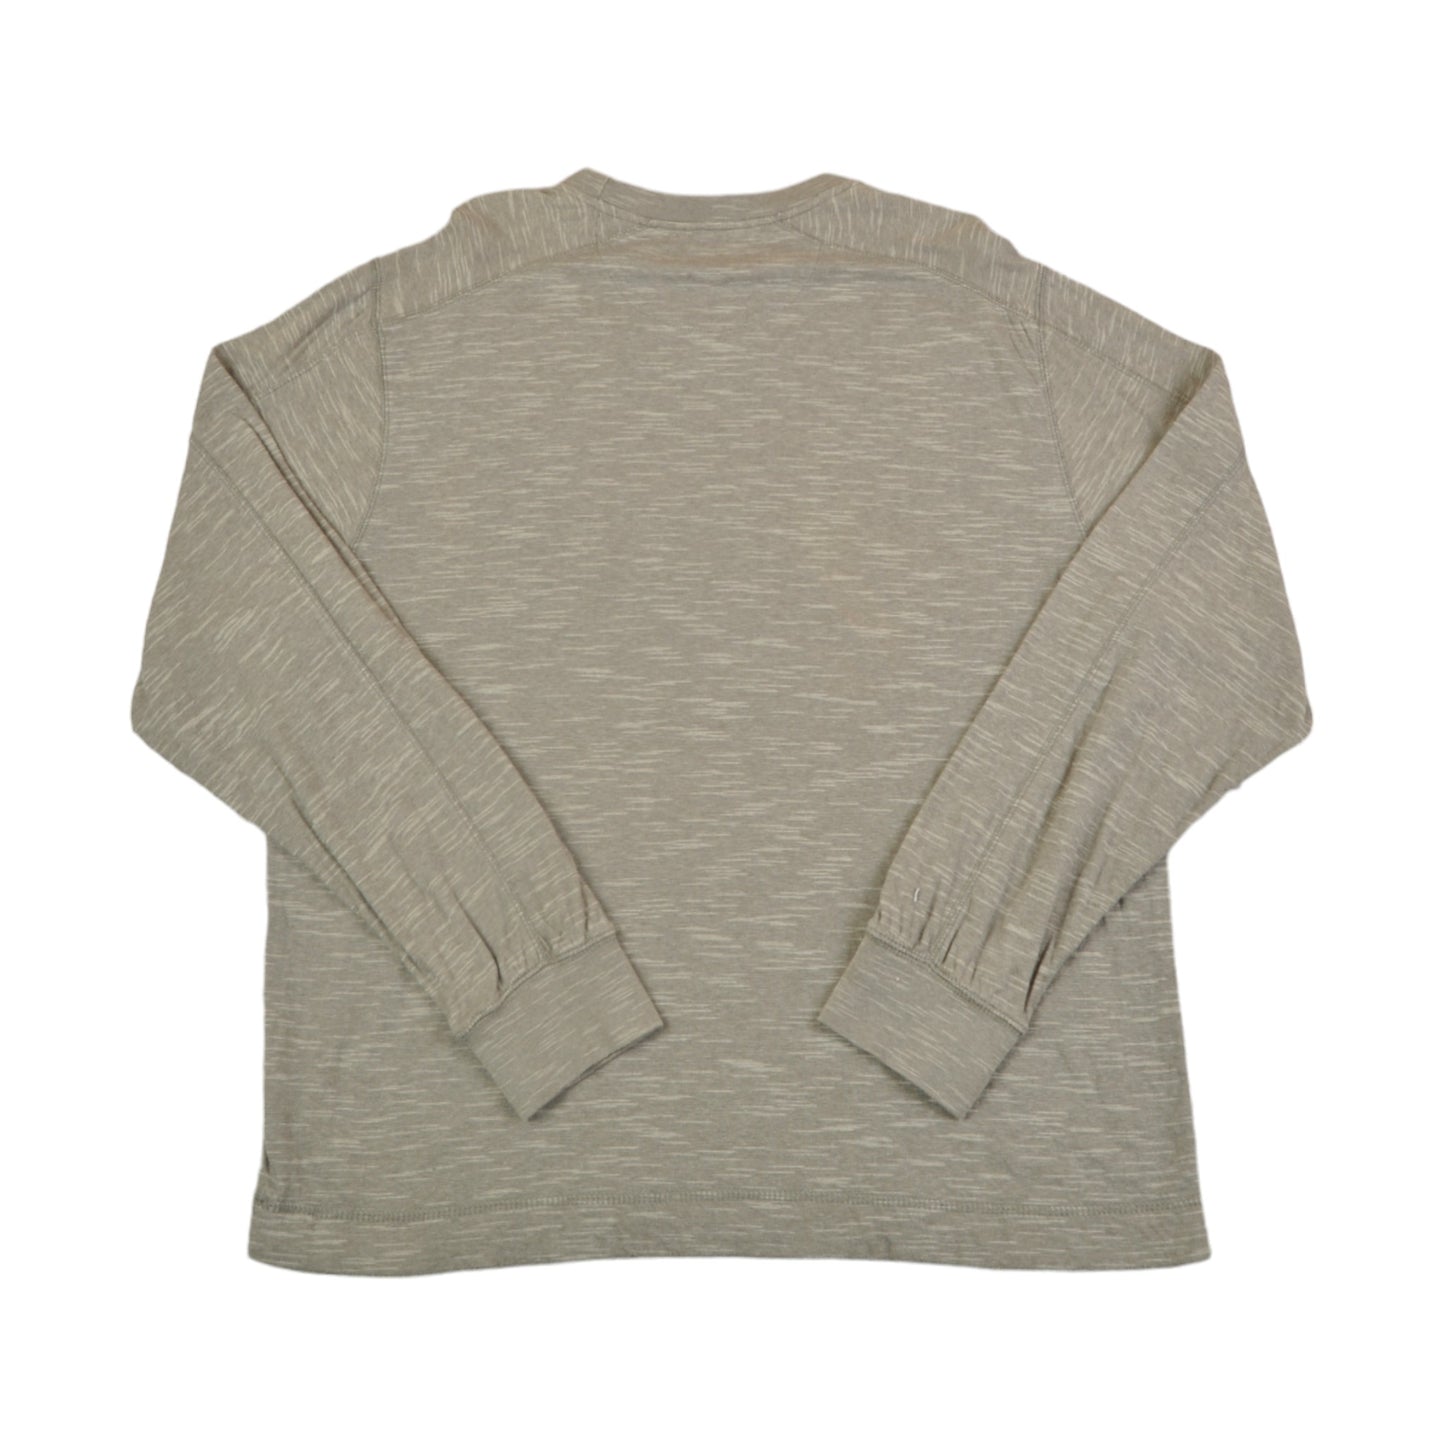 Vintage Chaps Crew Neck Sweatshirt Grey XL